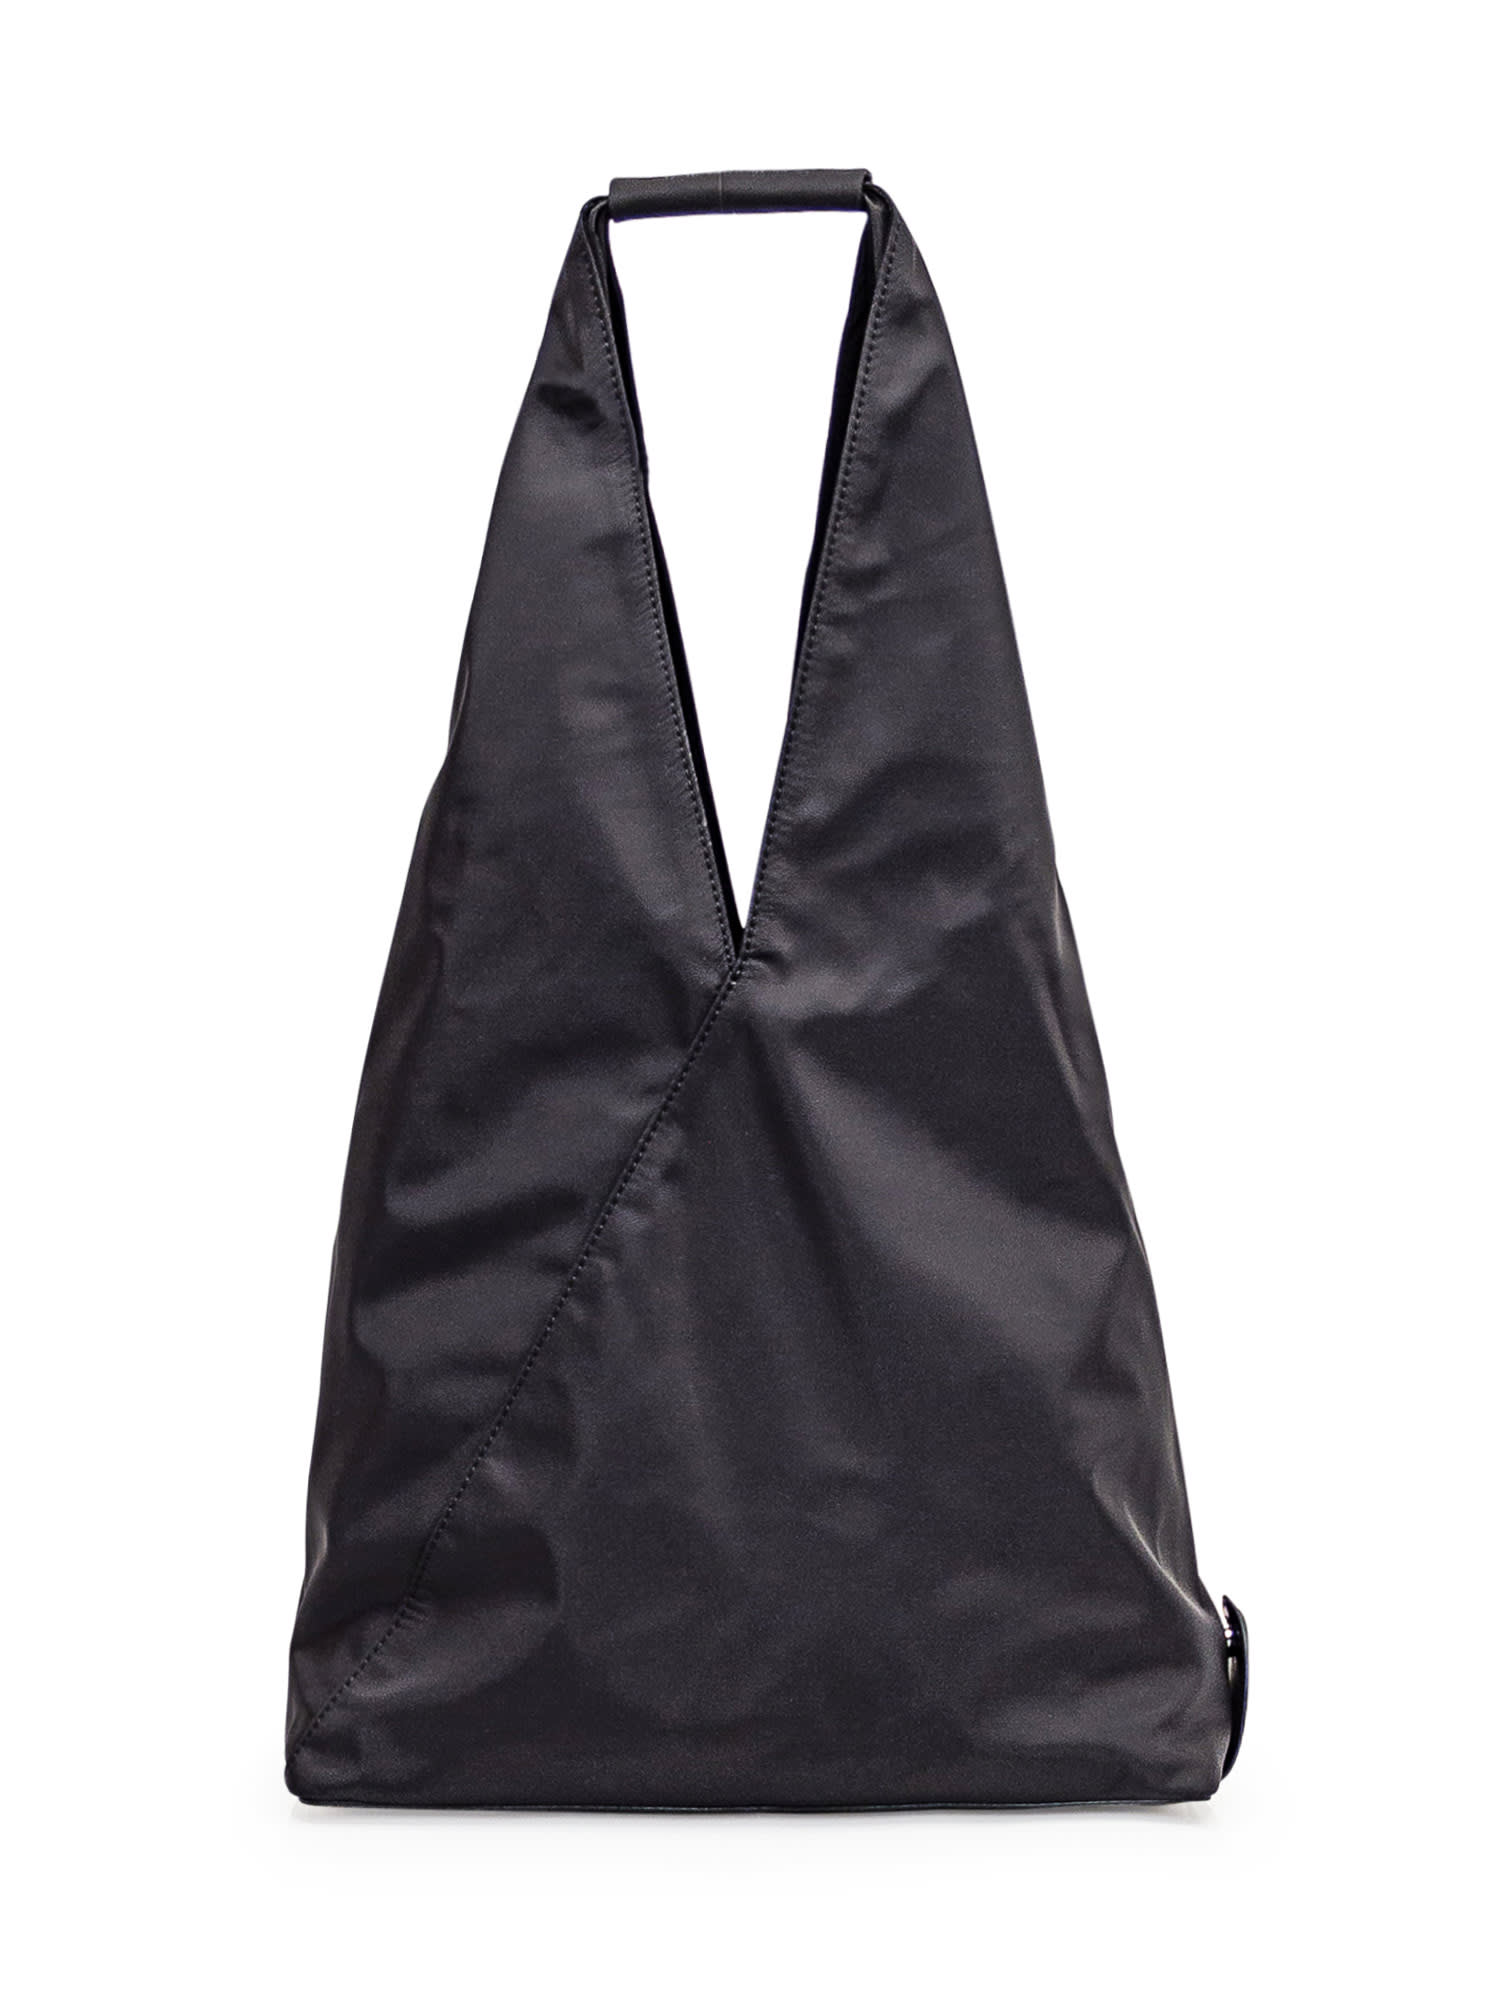 Japanese Foldable Tote Bag